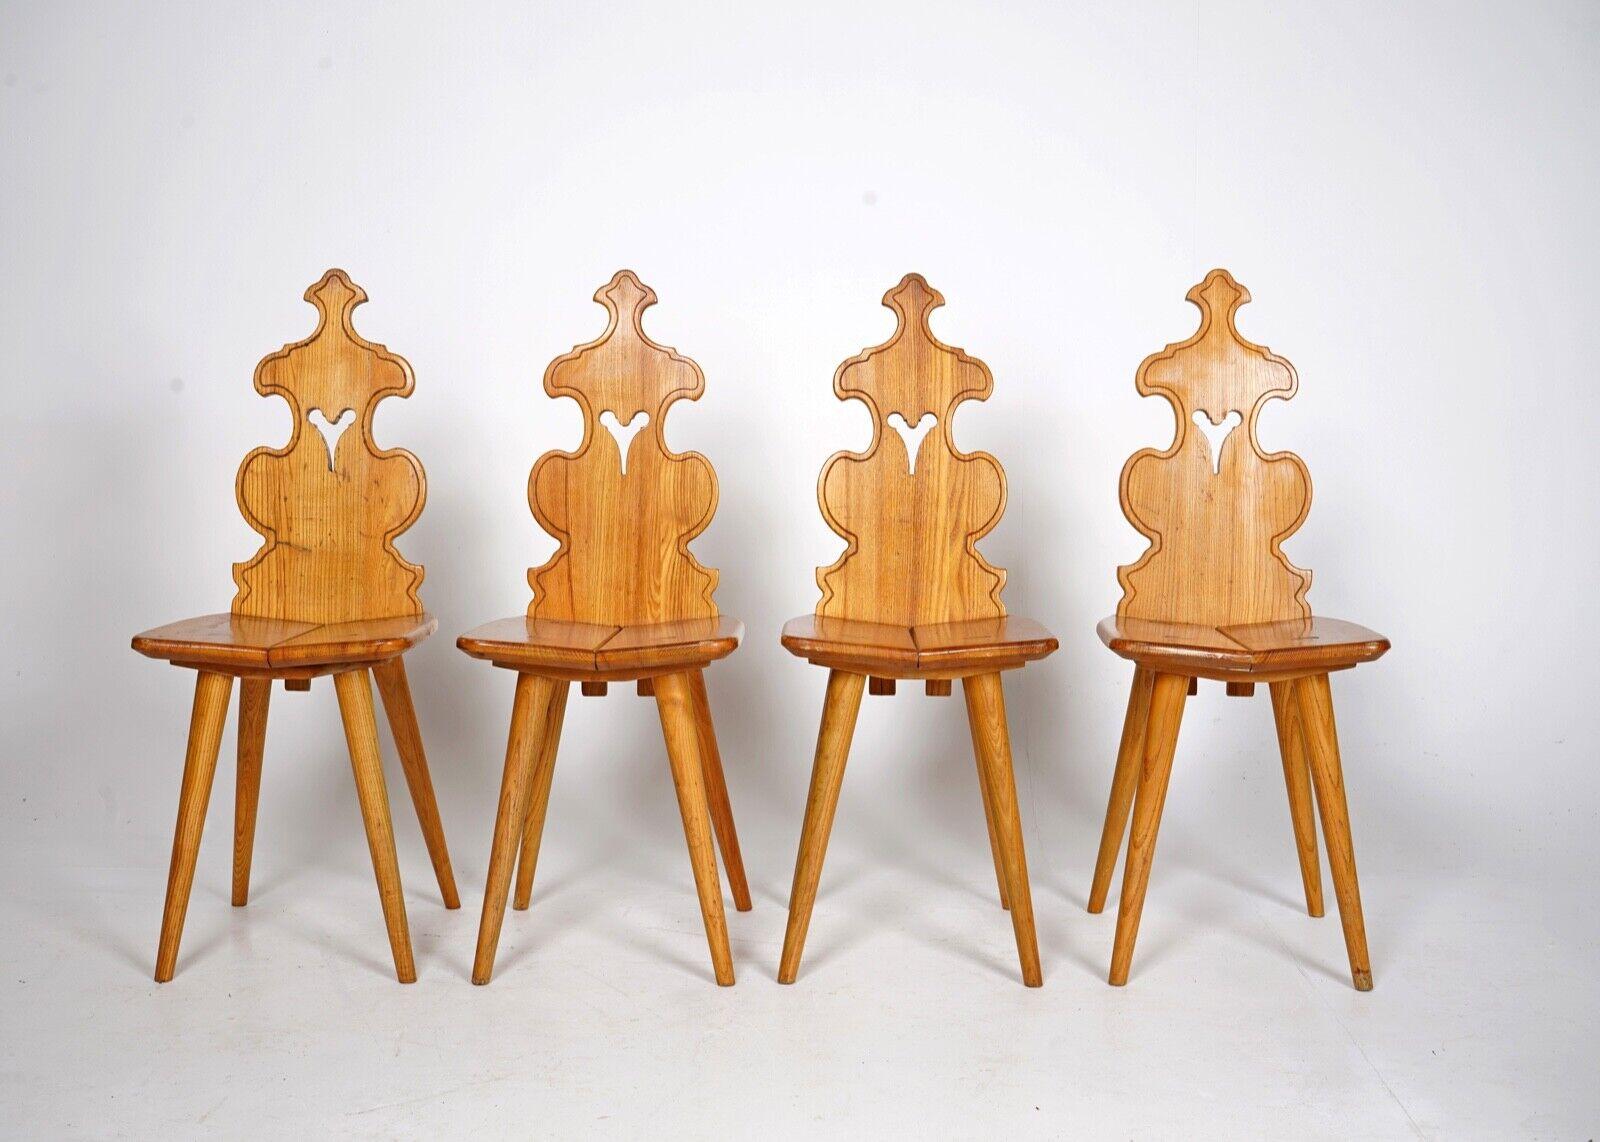 Polish Midcentury Brutalist Style Design Tiroler Chair Set of 4 by Cepelia, 1960